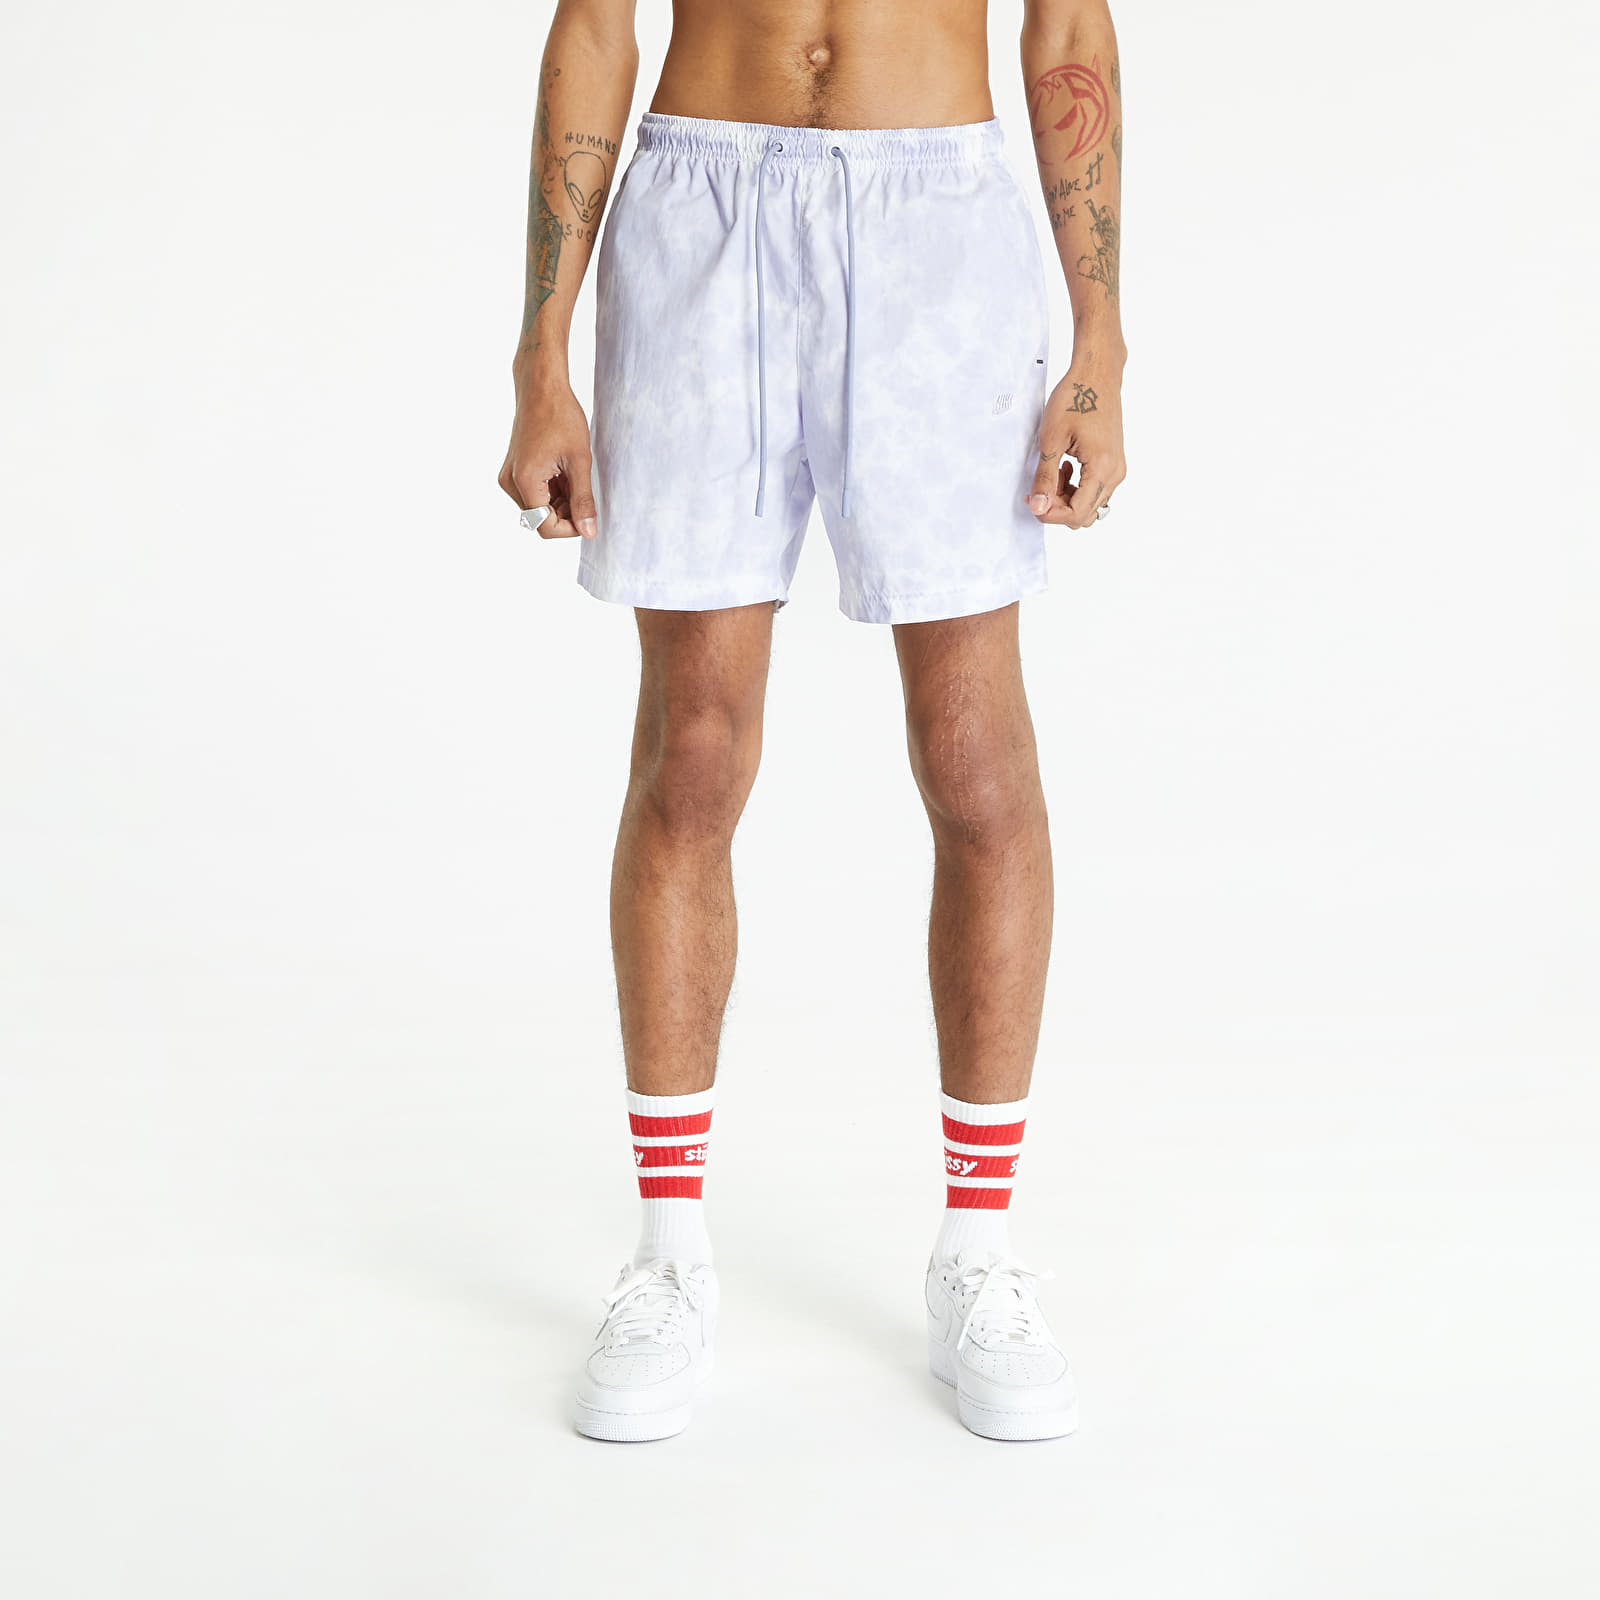 Shorts Nike Sportswear Men's Woven Shorts Indigo Haze/ White